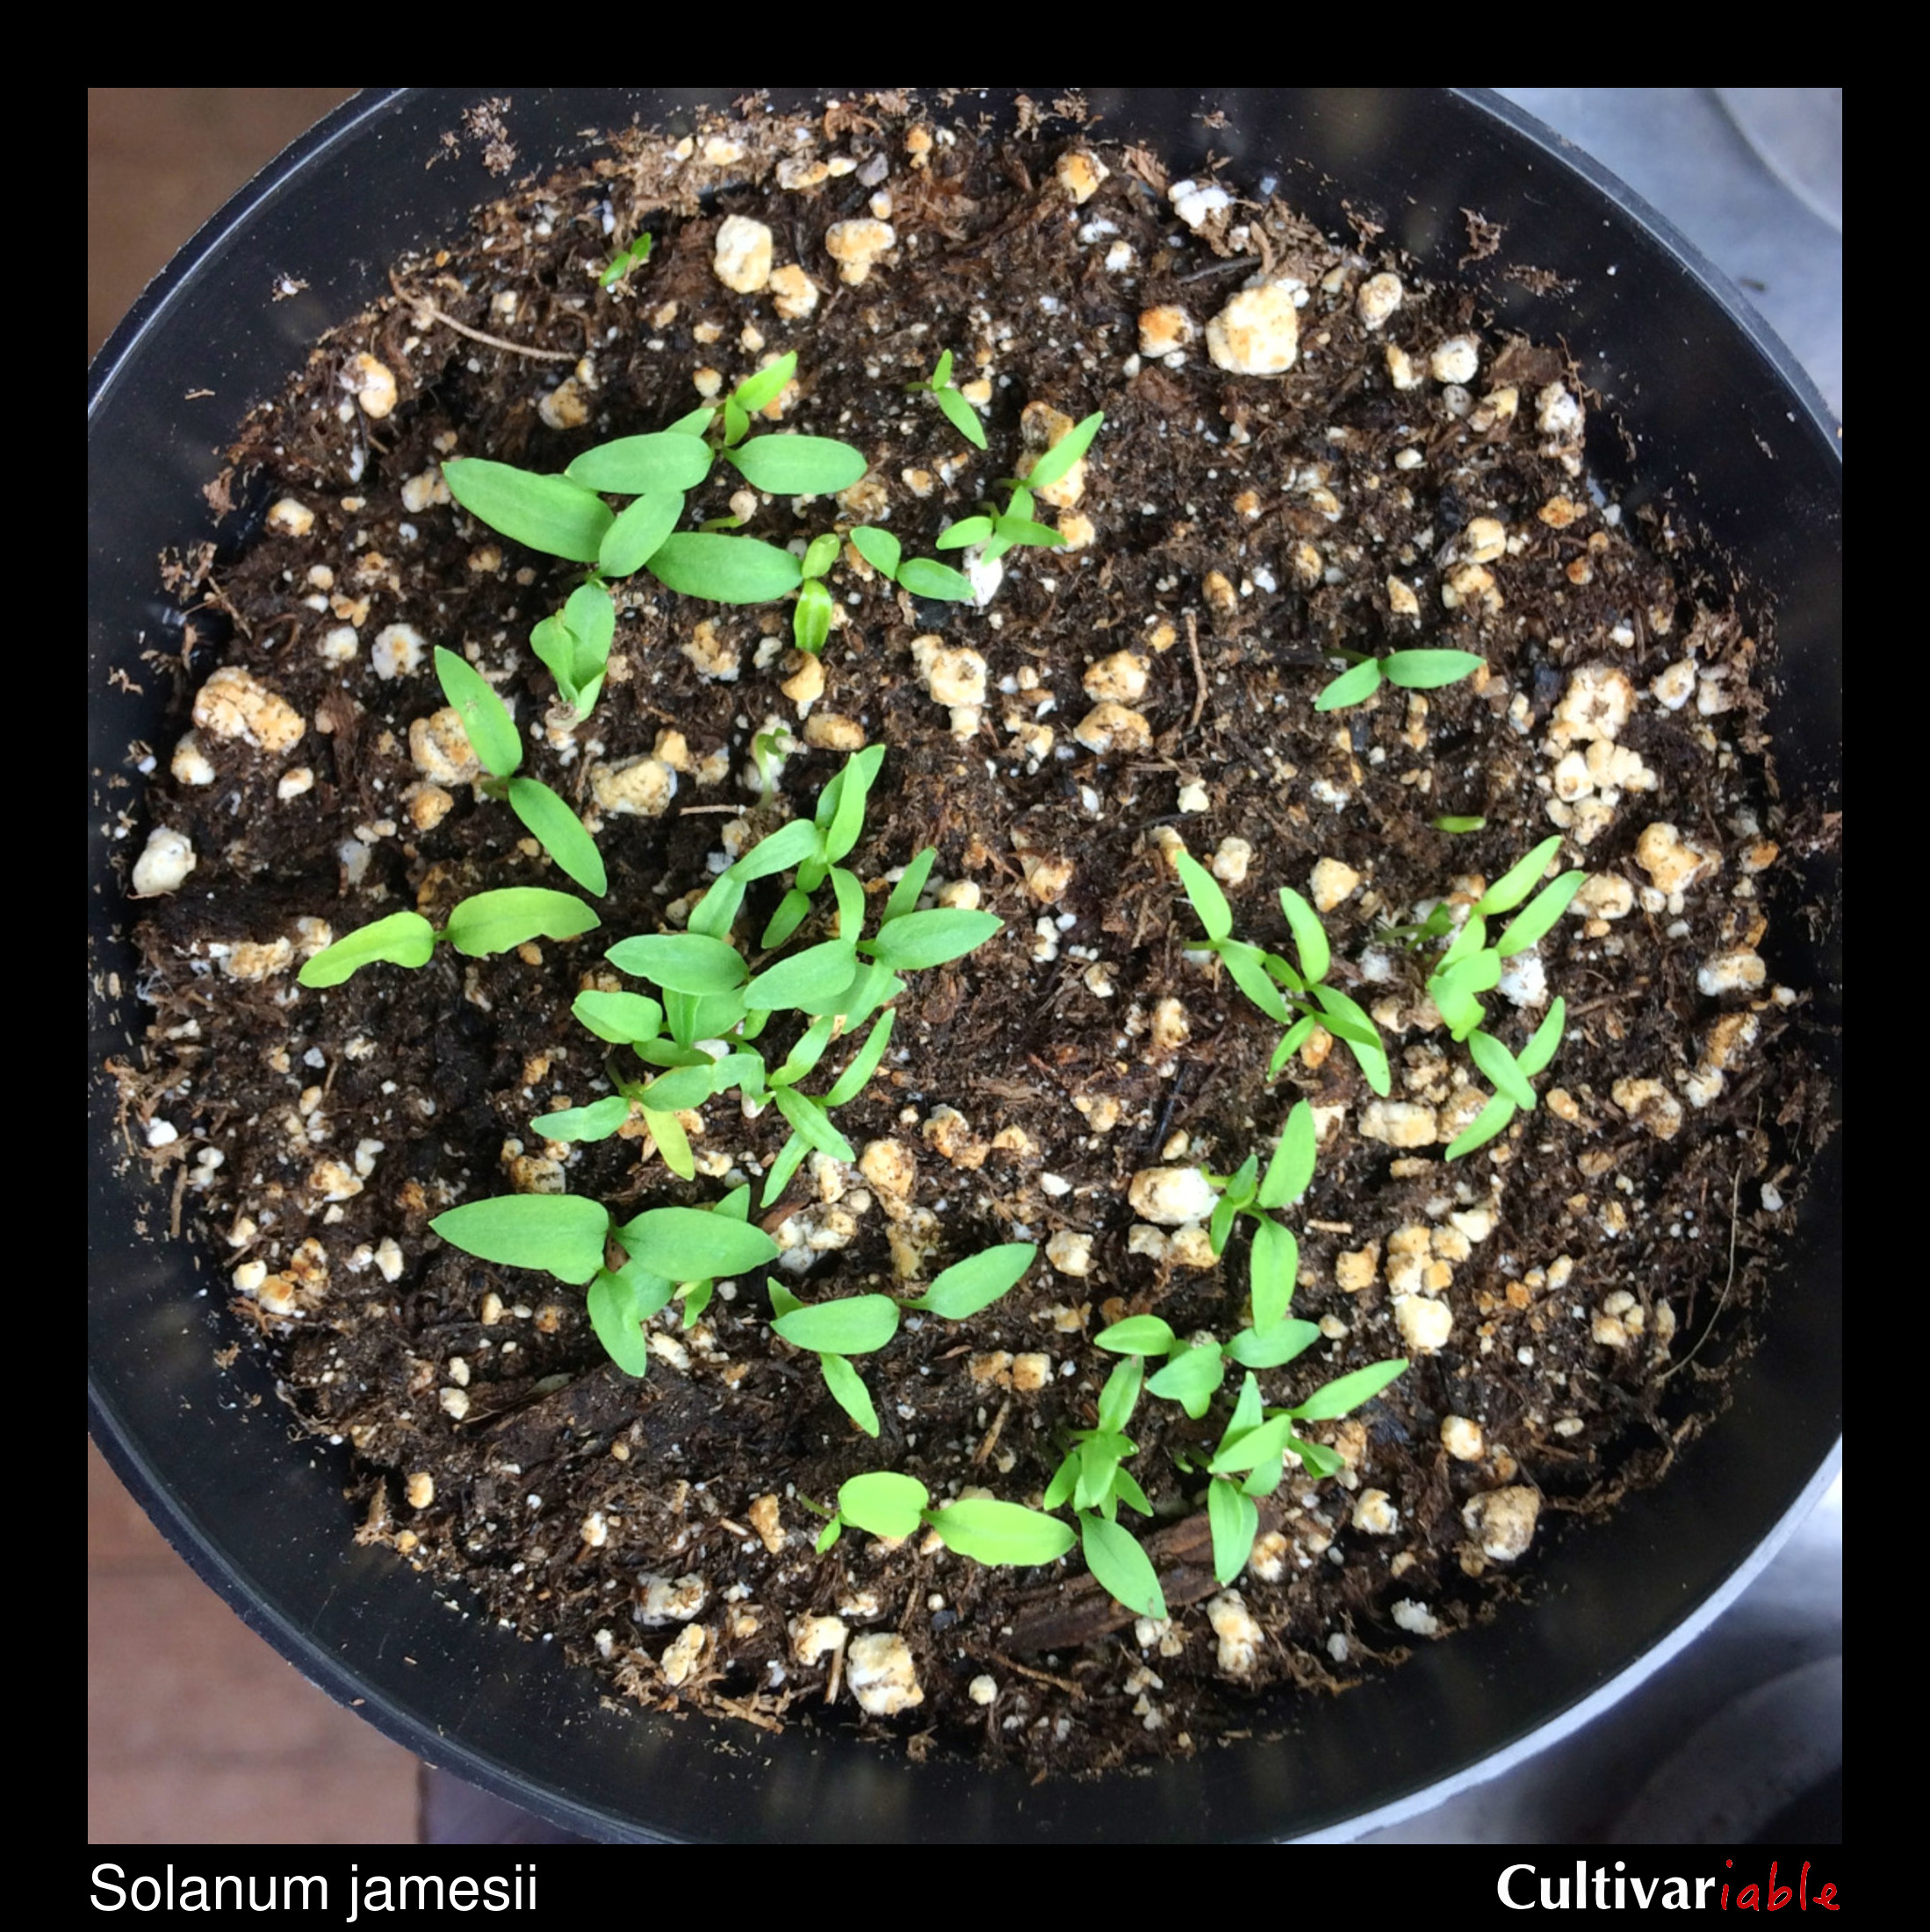 Solanum jamesii - How to Grow Wild Potatoes - Cultivariable